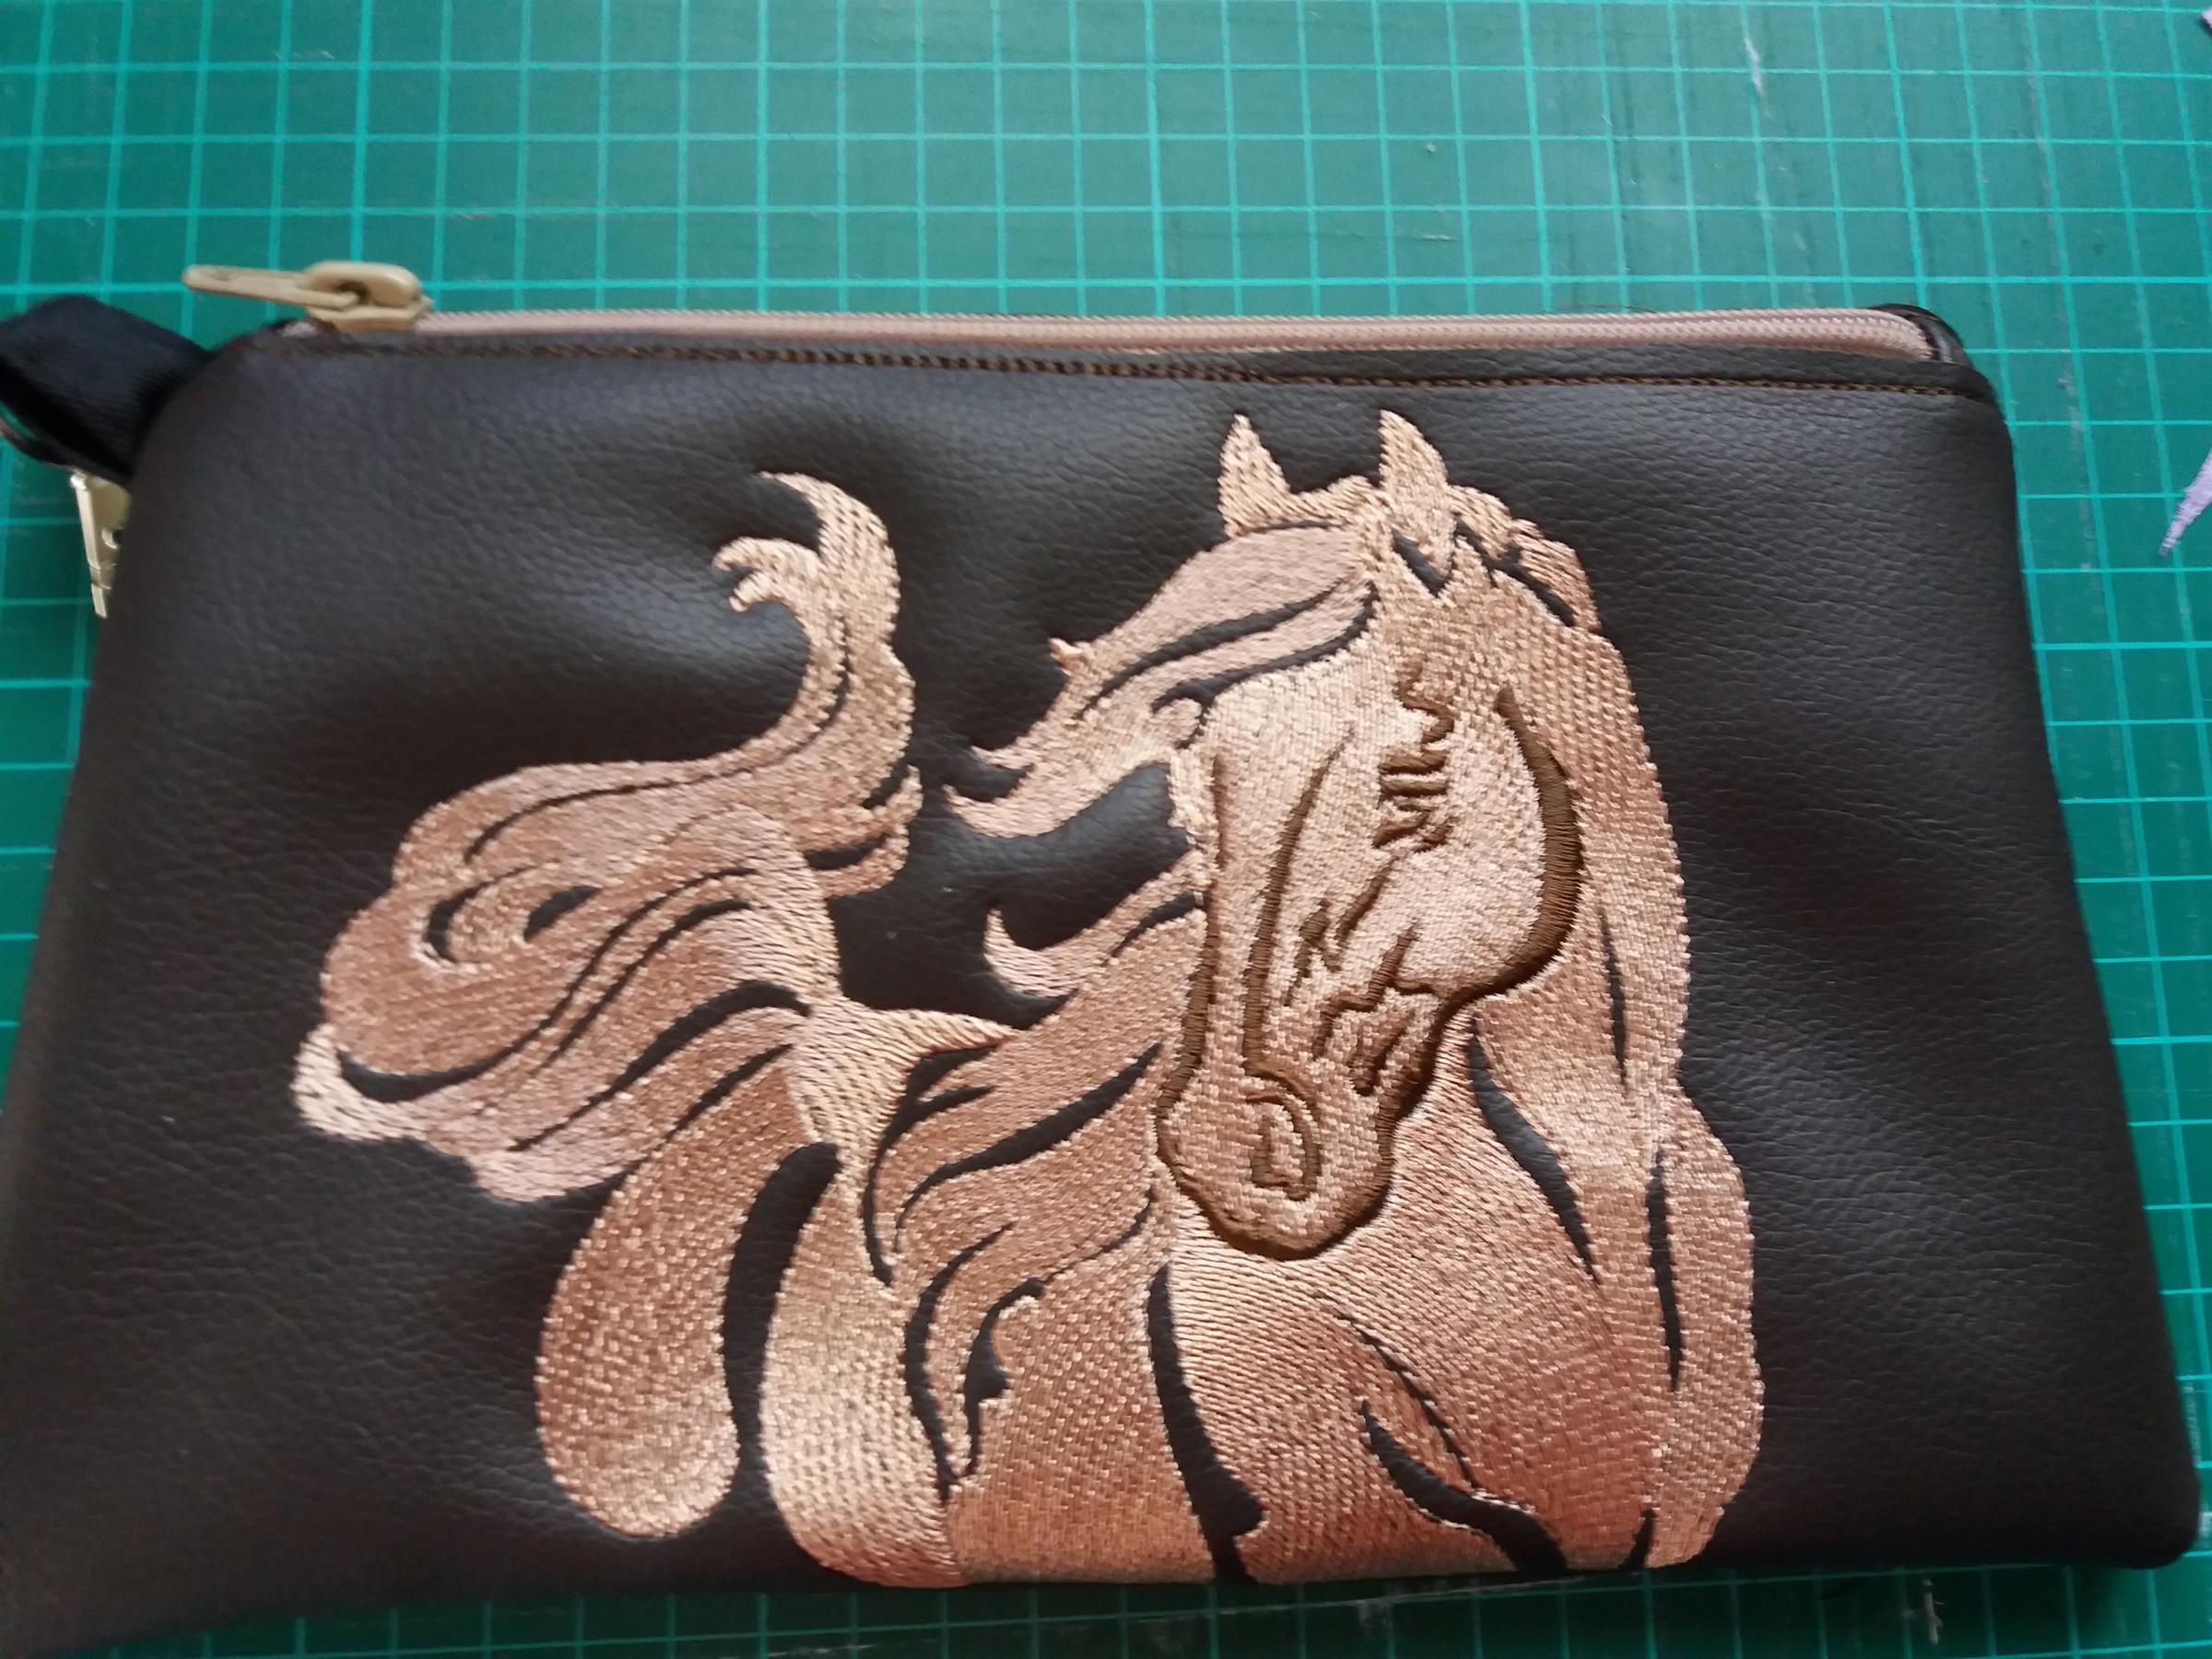 Embroidered handbag with Running horse design